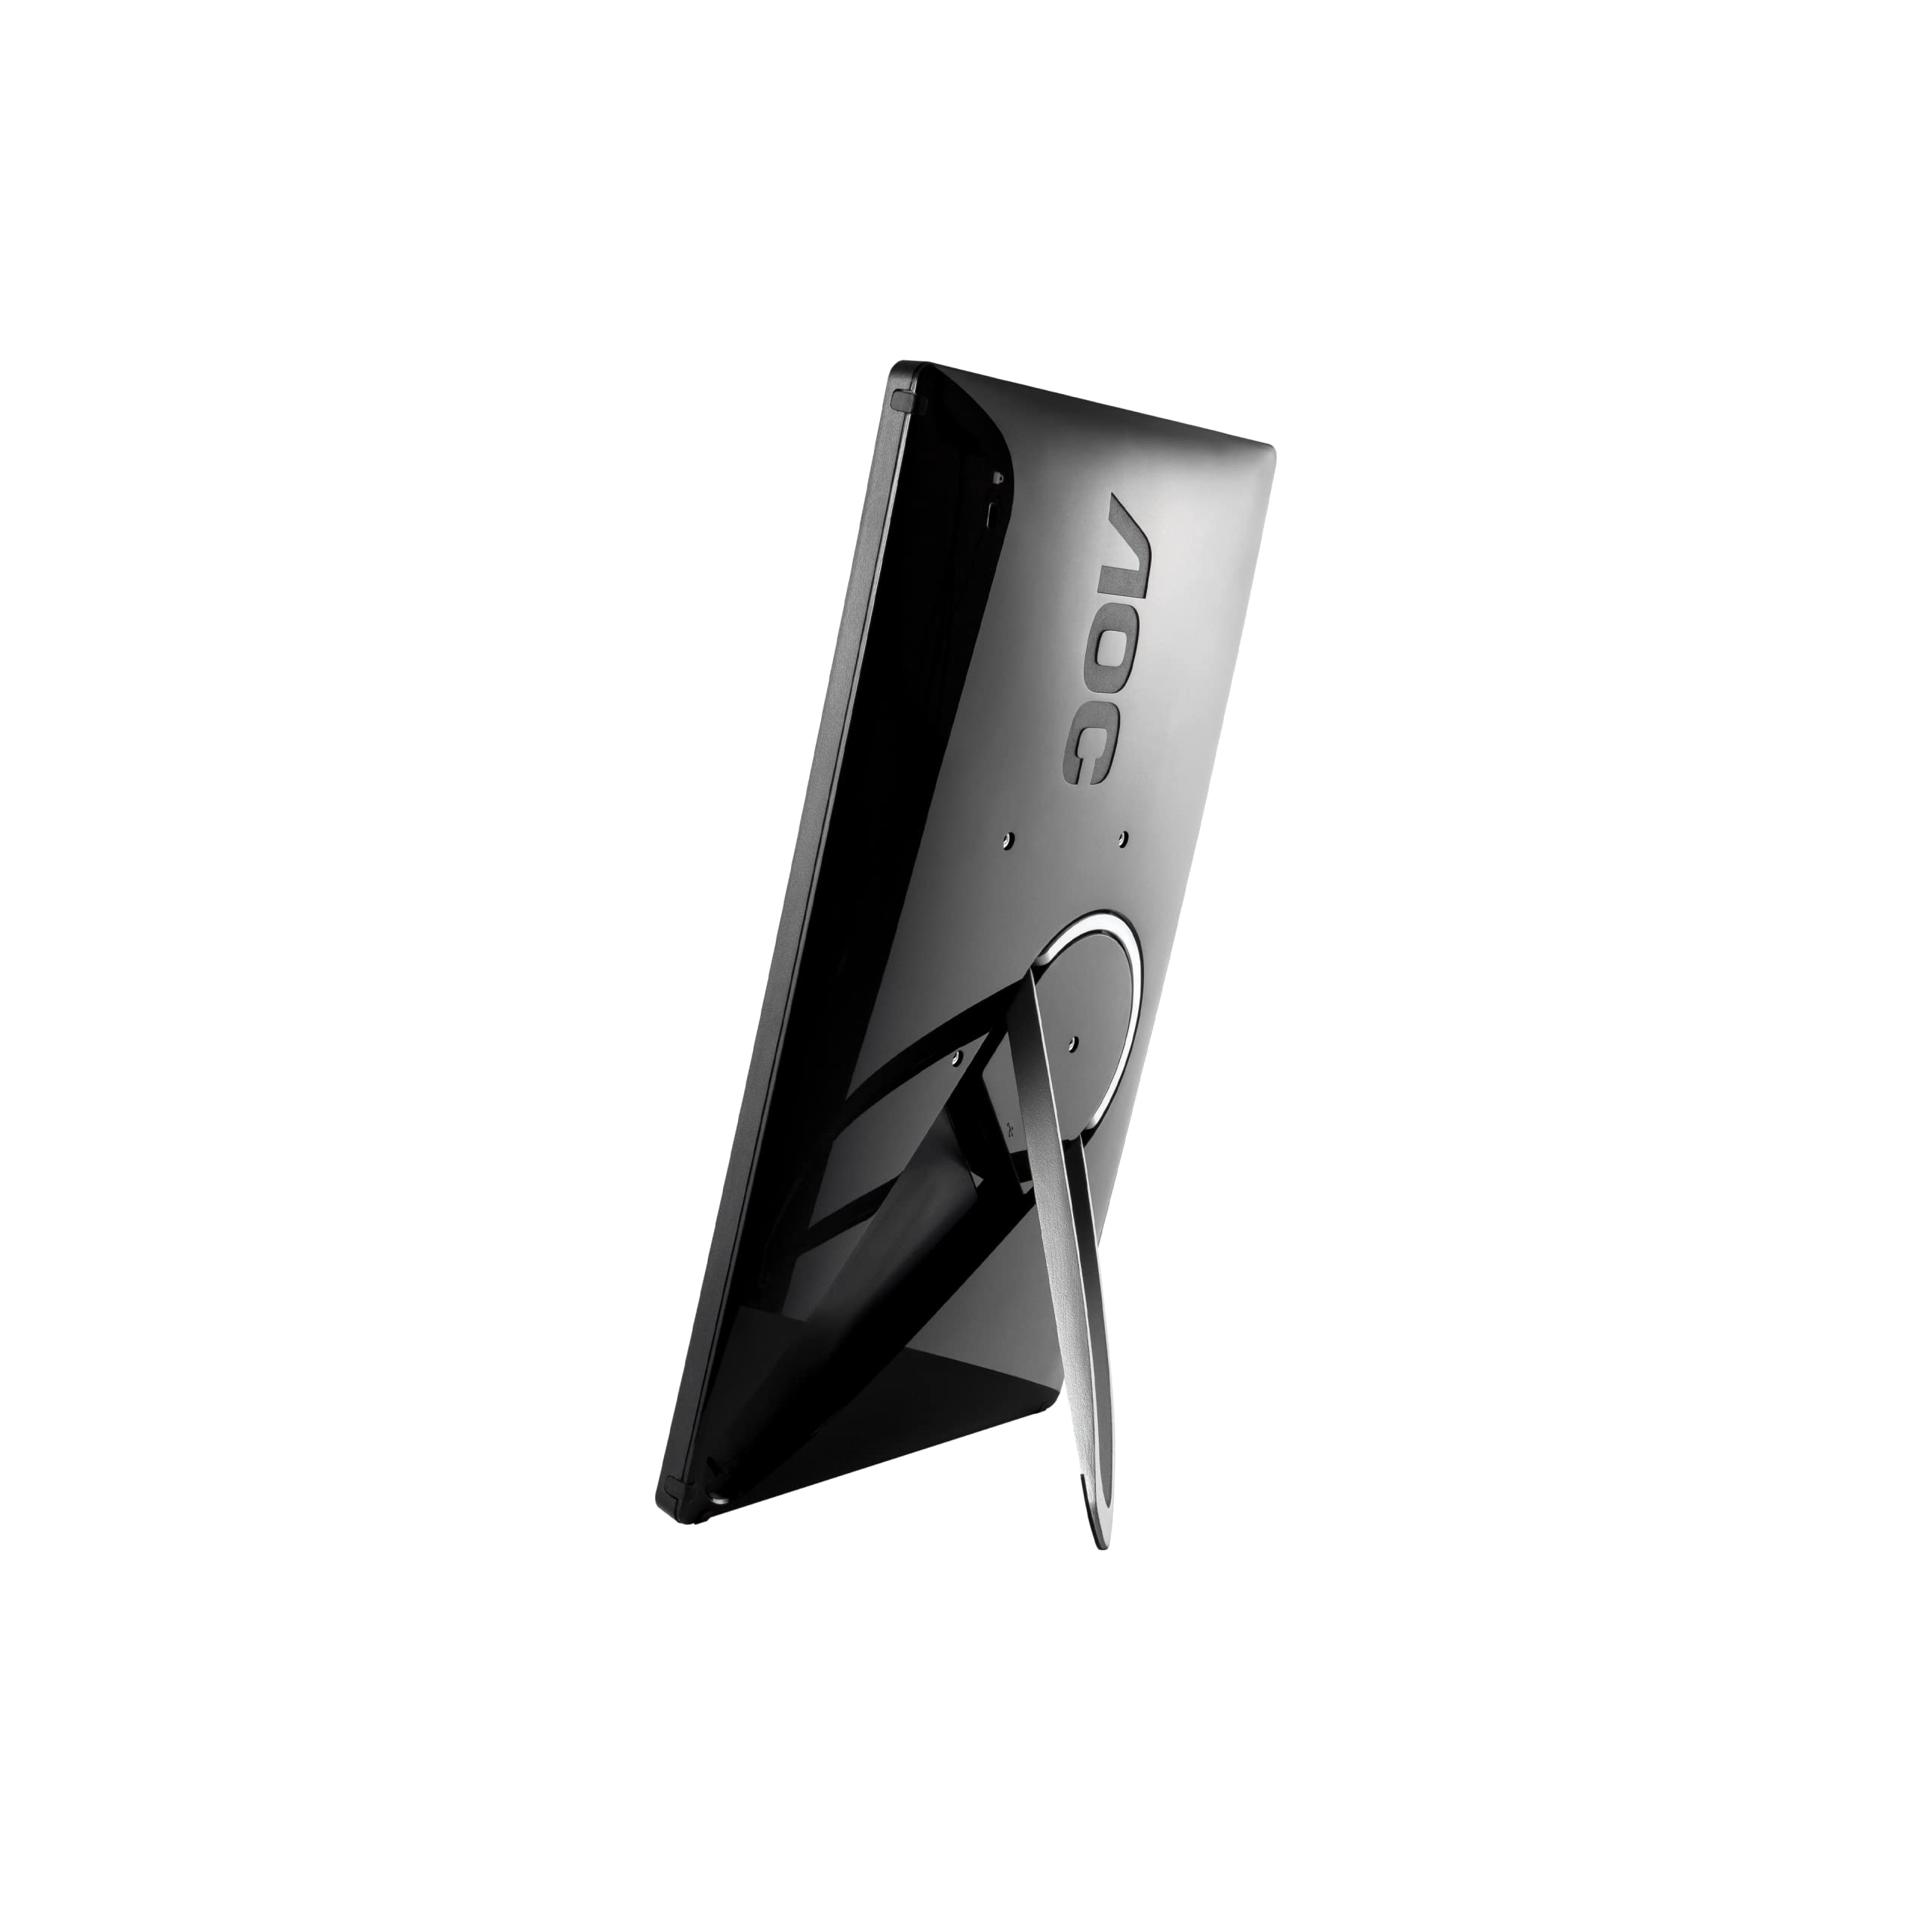 AOC e1659Fwu 15.6-Inch Ultra Slim 1366x768 Res 200 cd/m2 Brightness USB 3.0-Powered Portable LED Monitor w/ Case Black